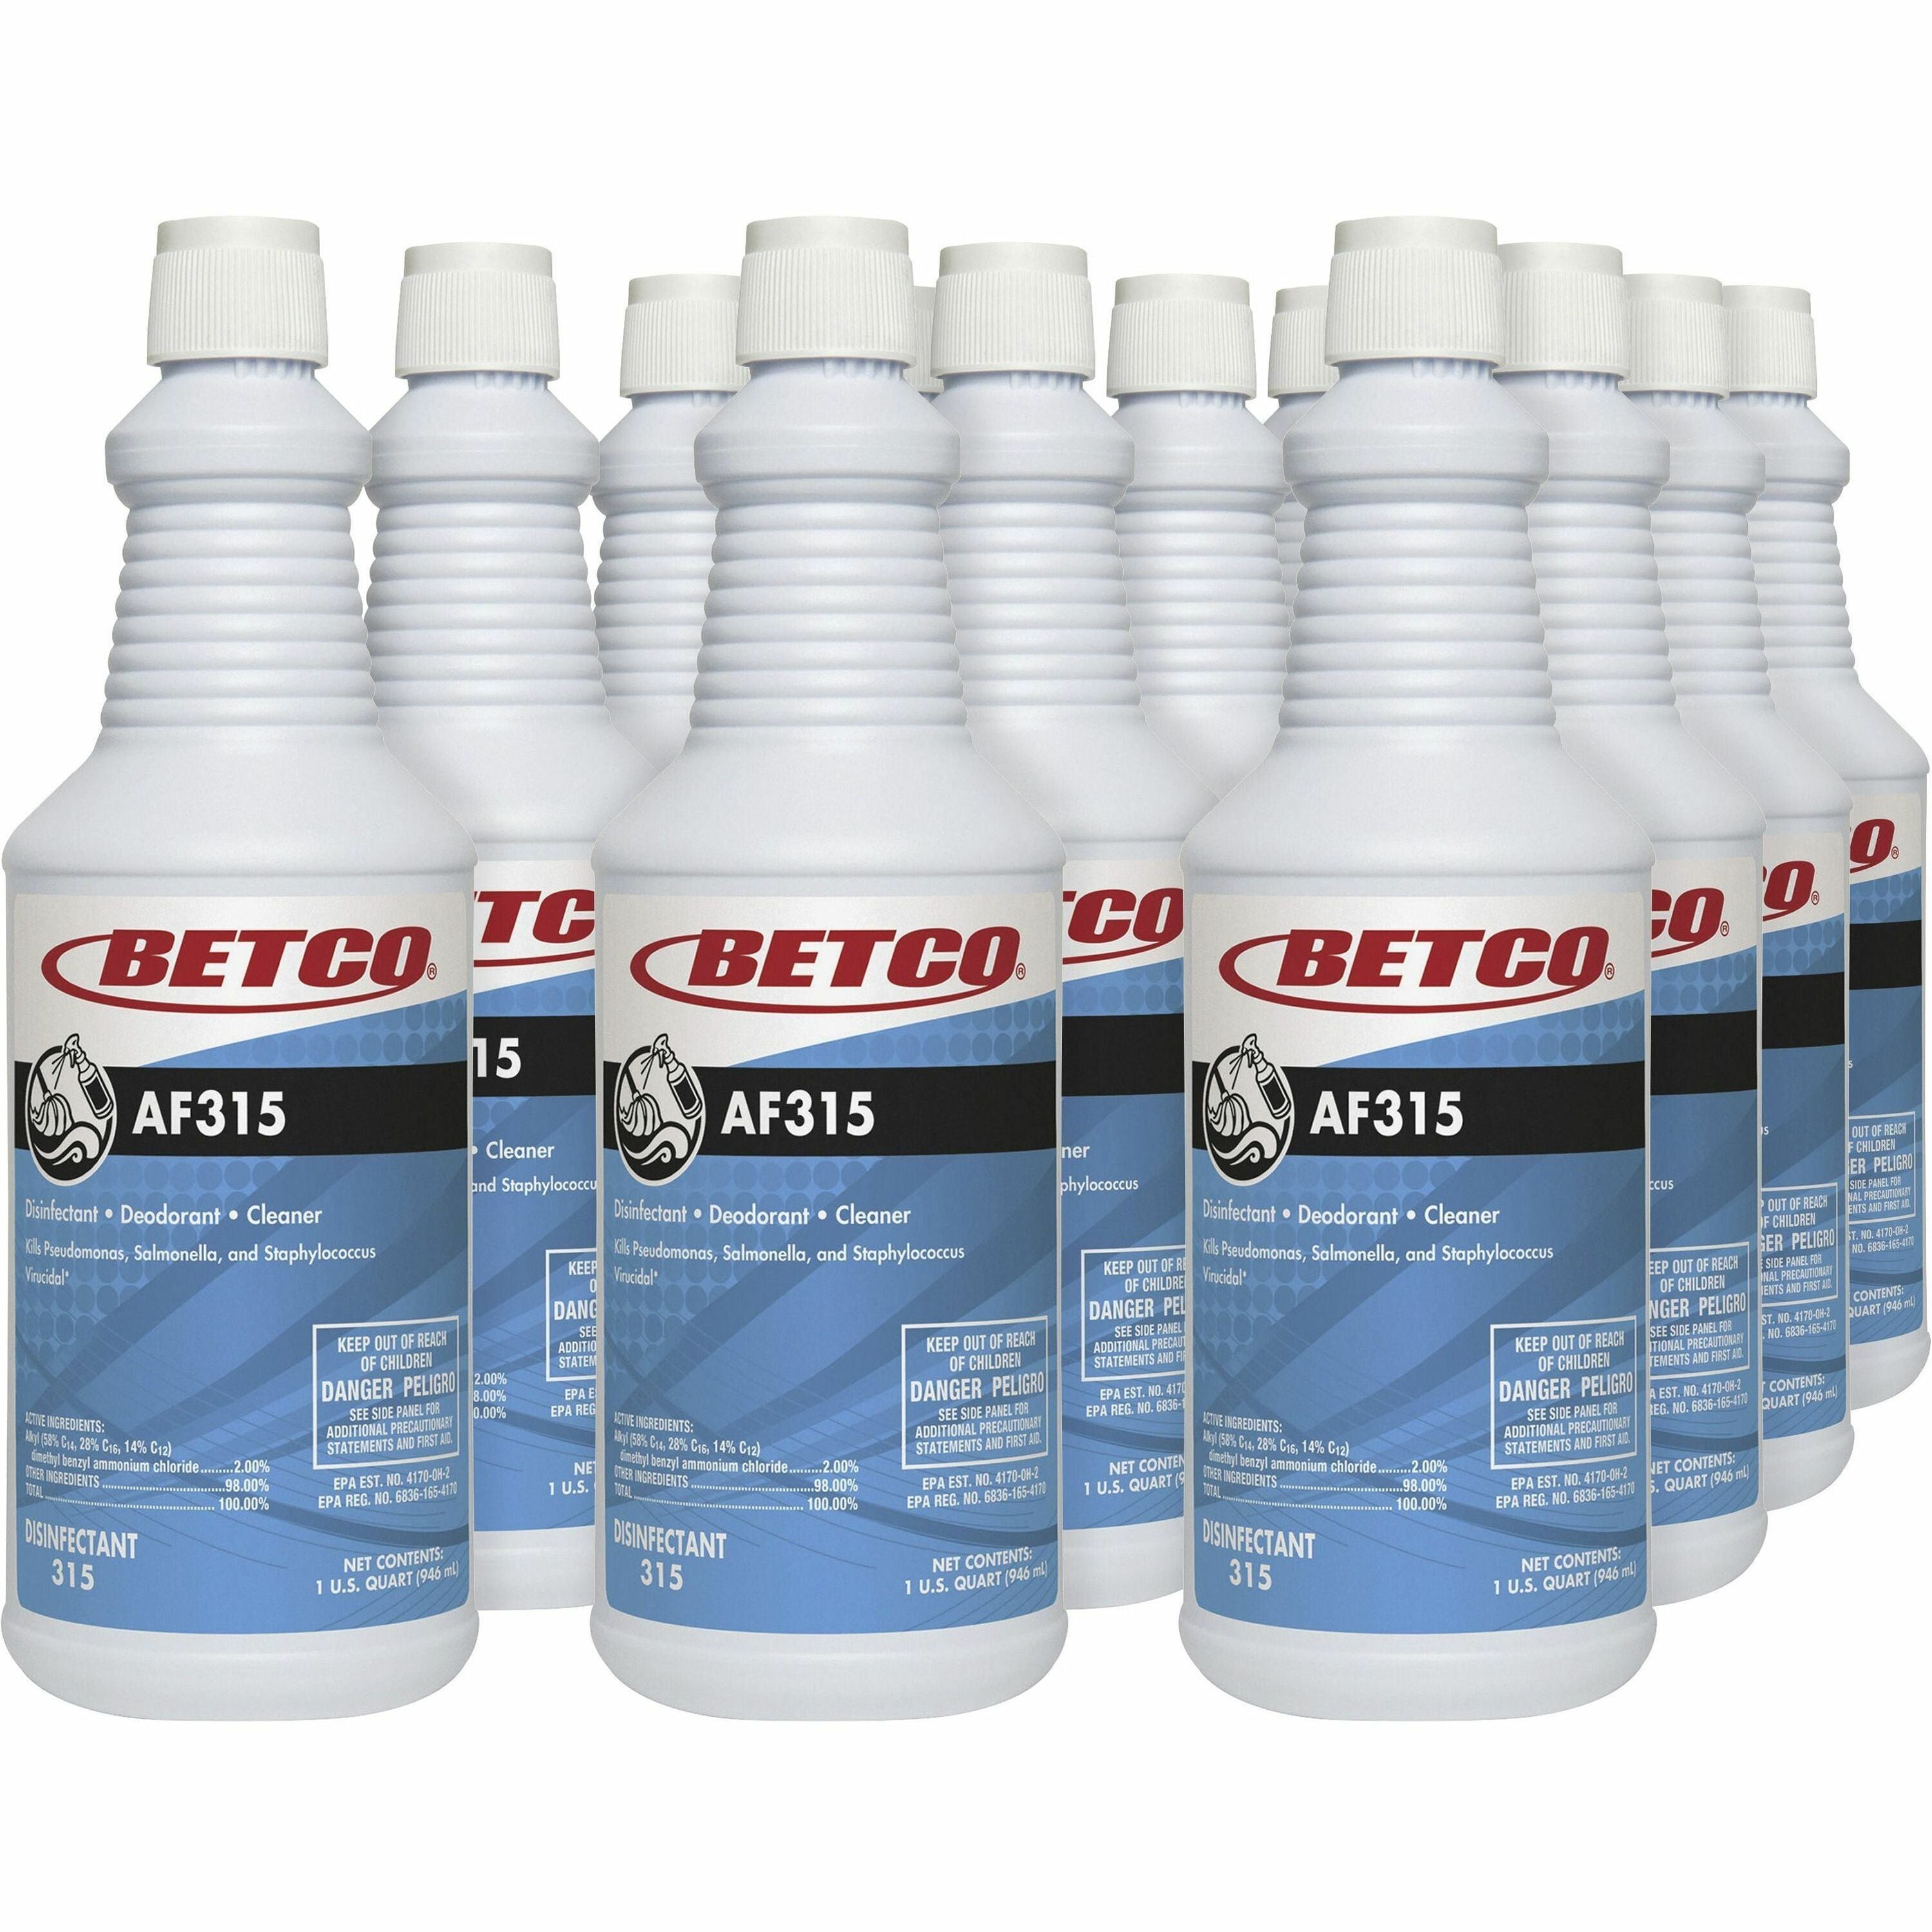 Betco AF315 Disinfectant Cleaner - Concentrate - 32 fl oz (1 quart) - Citrus Floral Scent - 12 / Carton - Deodorant, Detergent Resistant, pH Neutral, Long Lasting, Deodorize - Turquoise - 1